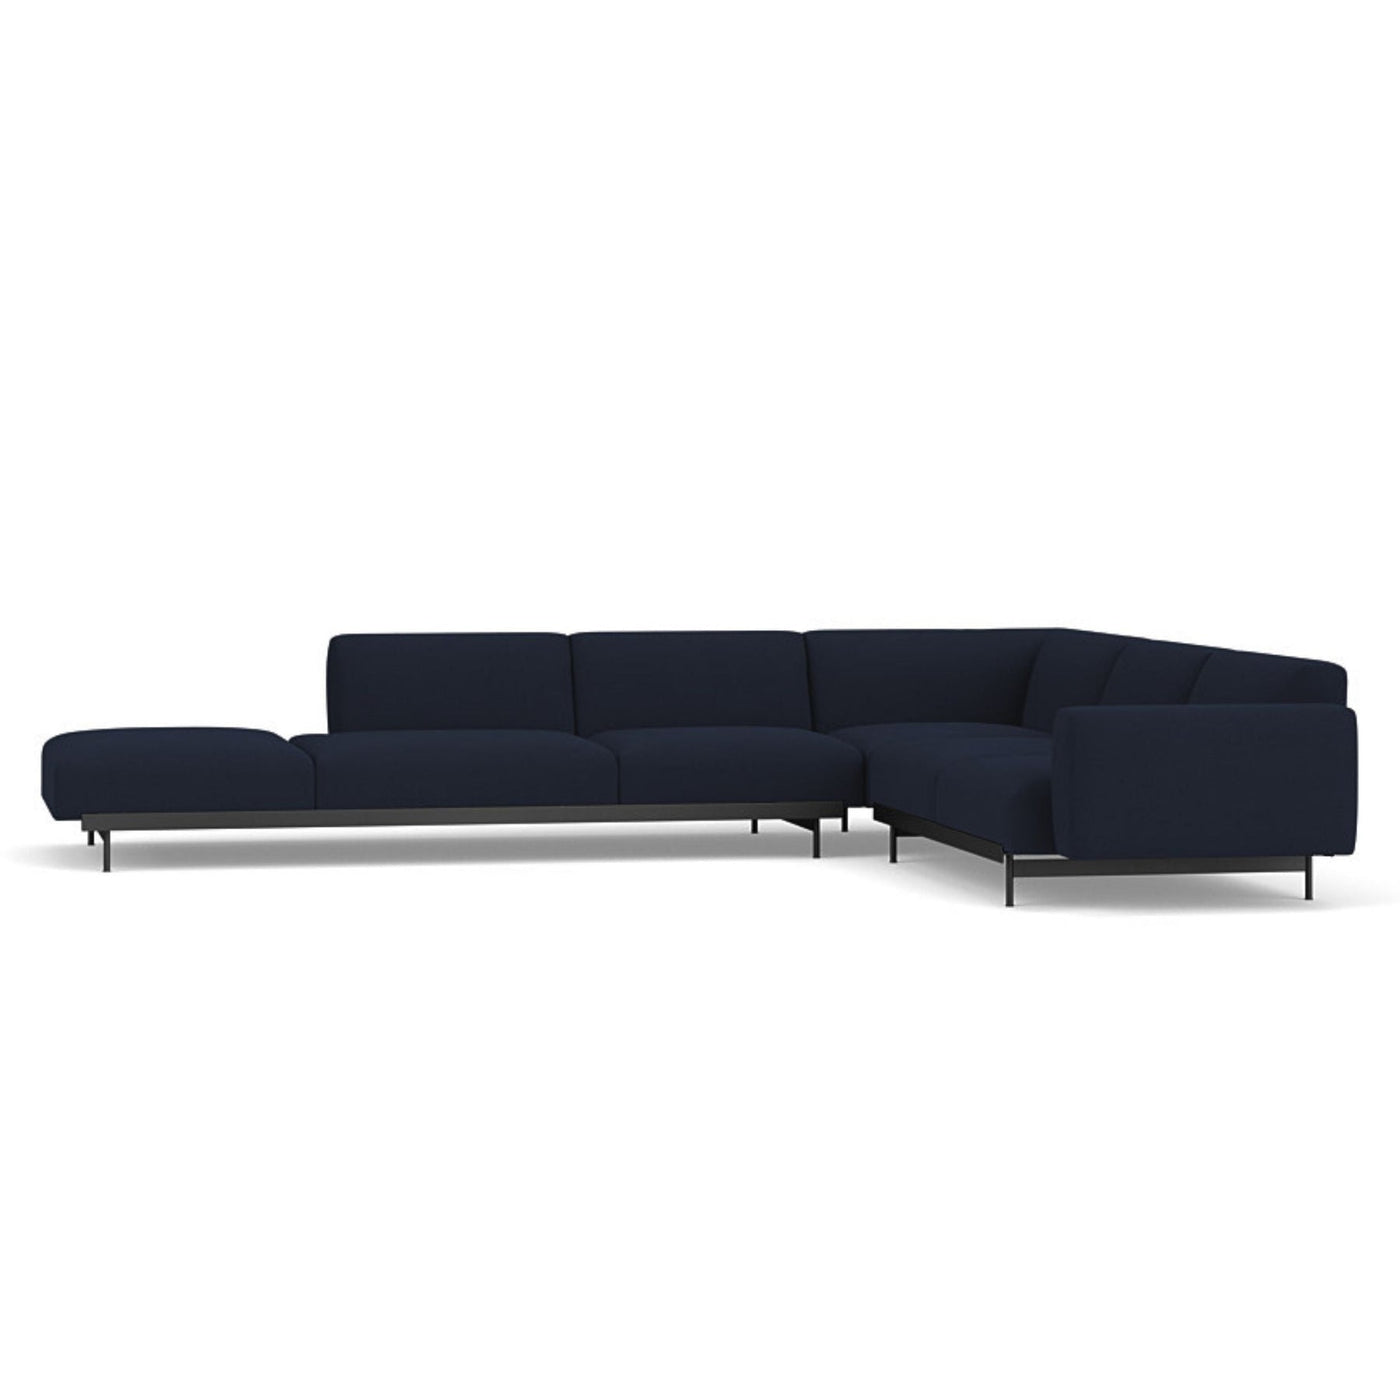 Muuto In Situ corner sofa, configuration 7 in vidar 554 fabric. Made to order from someday designs. #colour_vidar-554